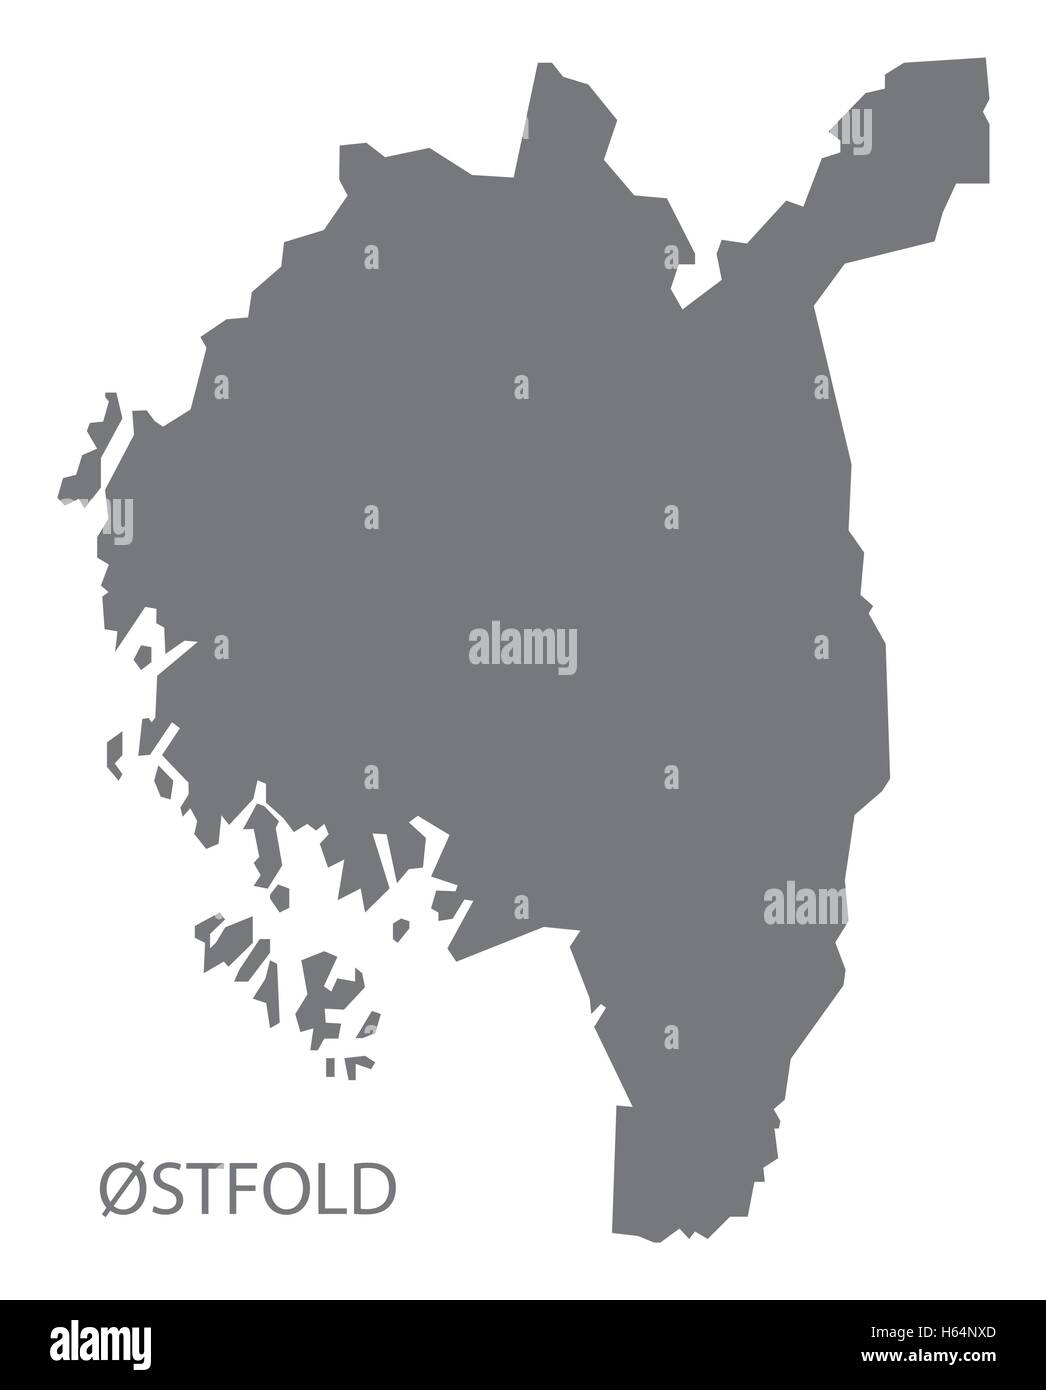 Ostfold Norwegen Karte grau Stock Vektor